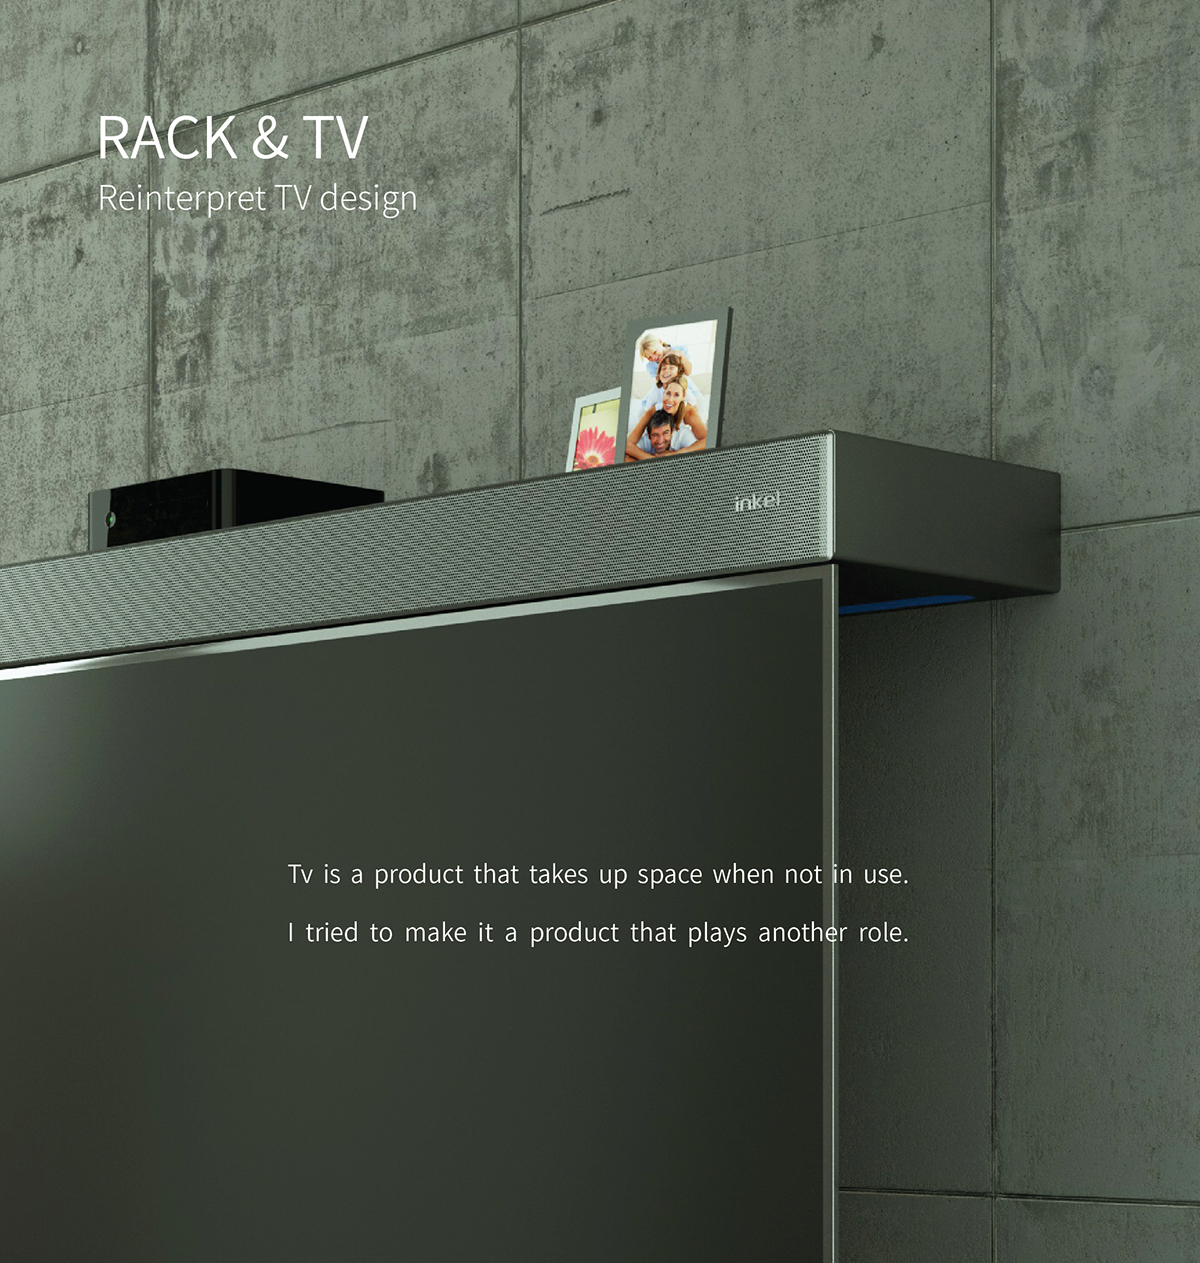 tv product productdesign design industrial furniture rack reinterpret